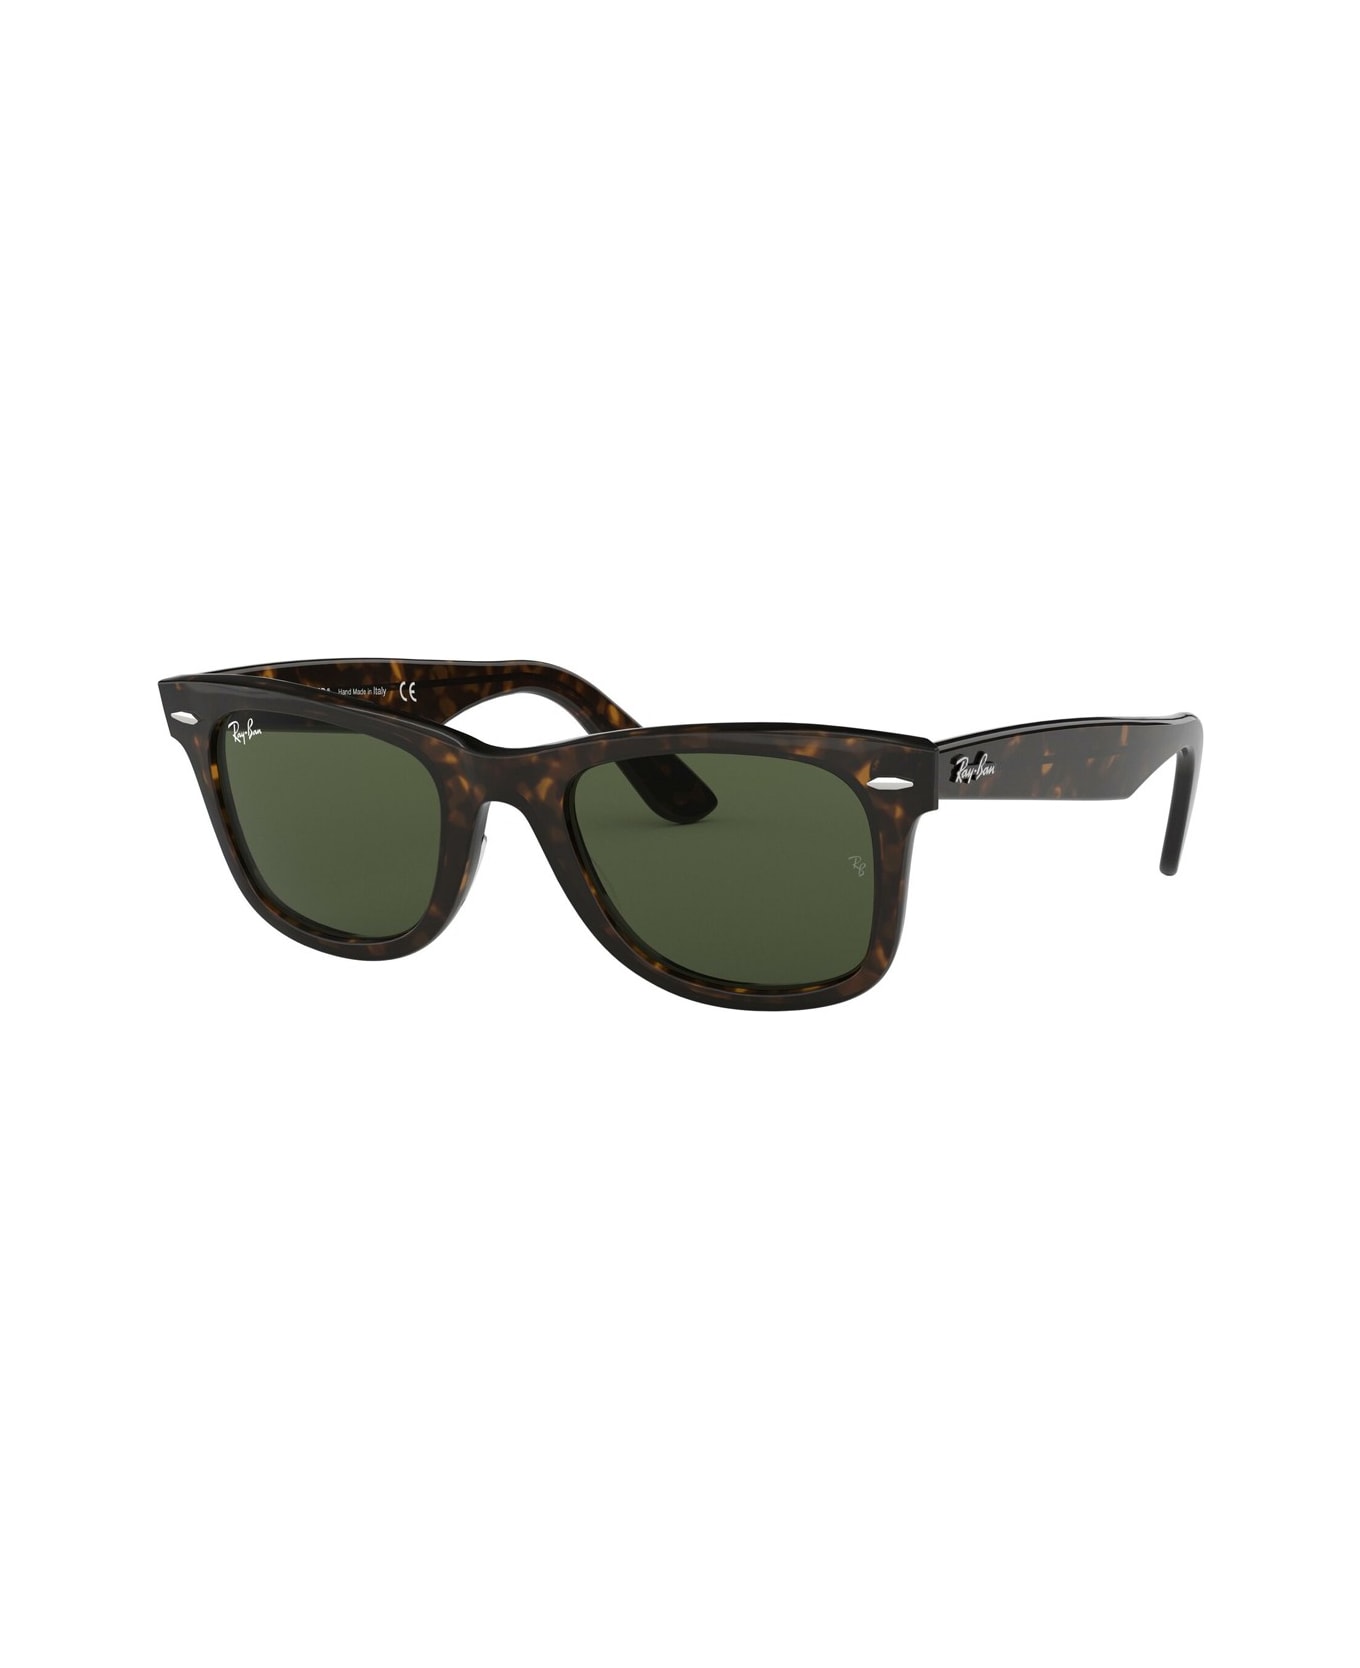 Ray-Ban Original Wayfarer Rb 2140 Sunglasses - Marrone サングラス